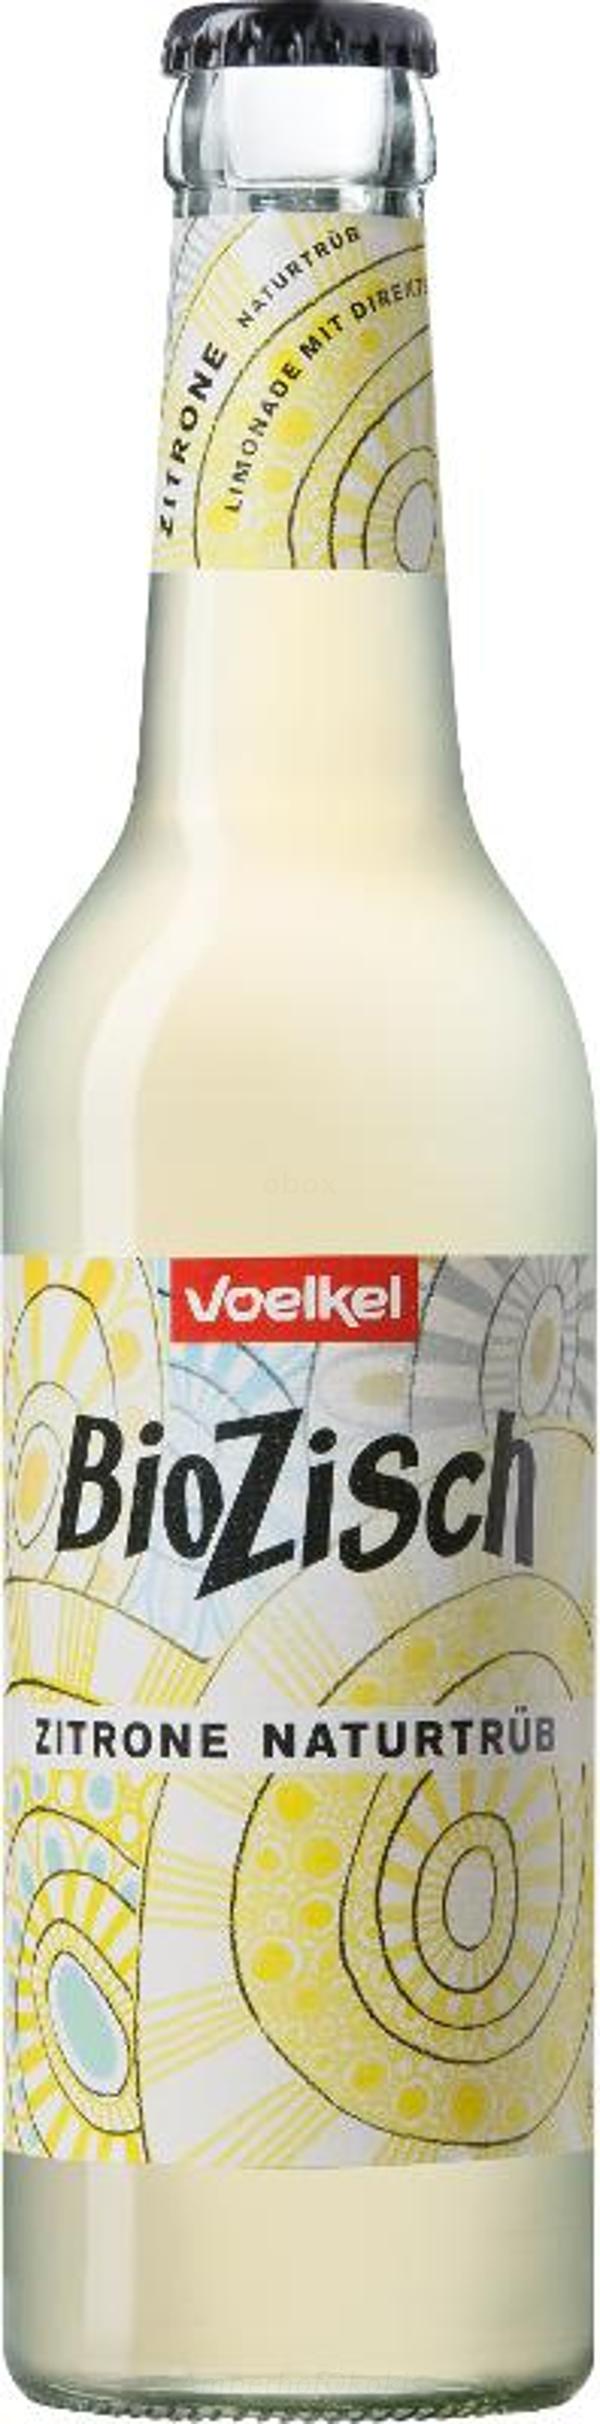 Produktfoto zu BioZisch Zitrone naturtrüb 0,33 l